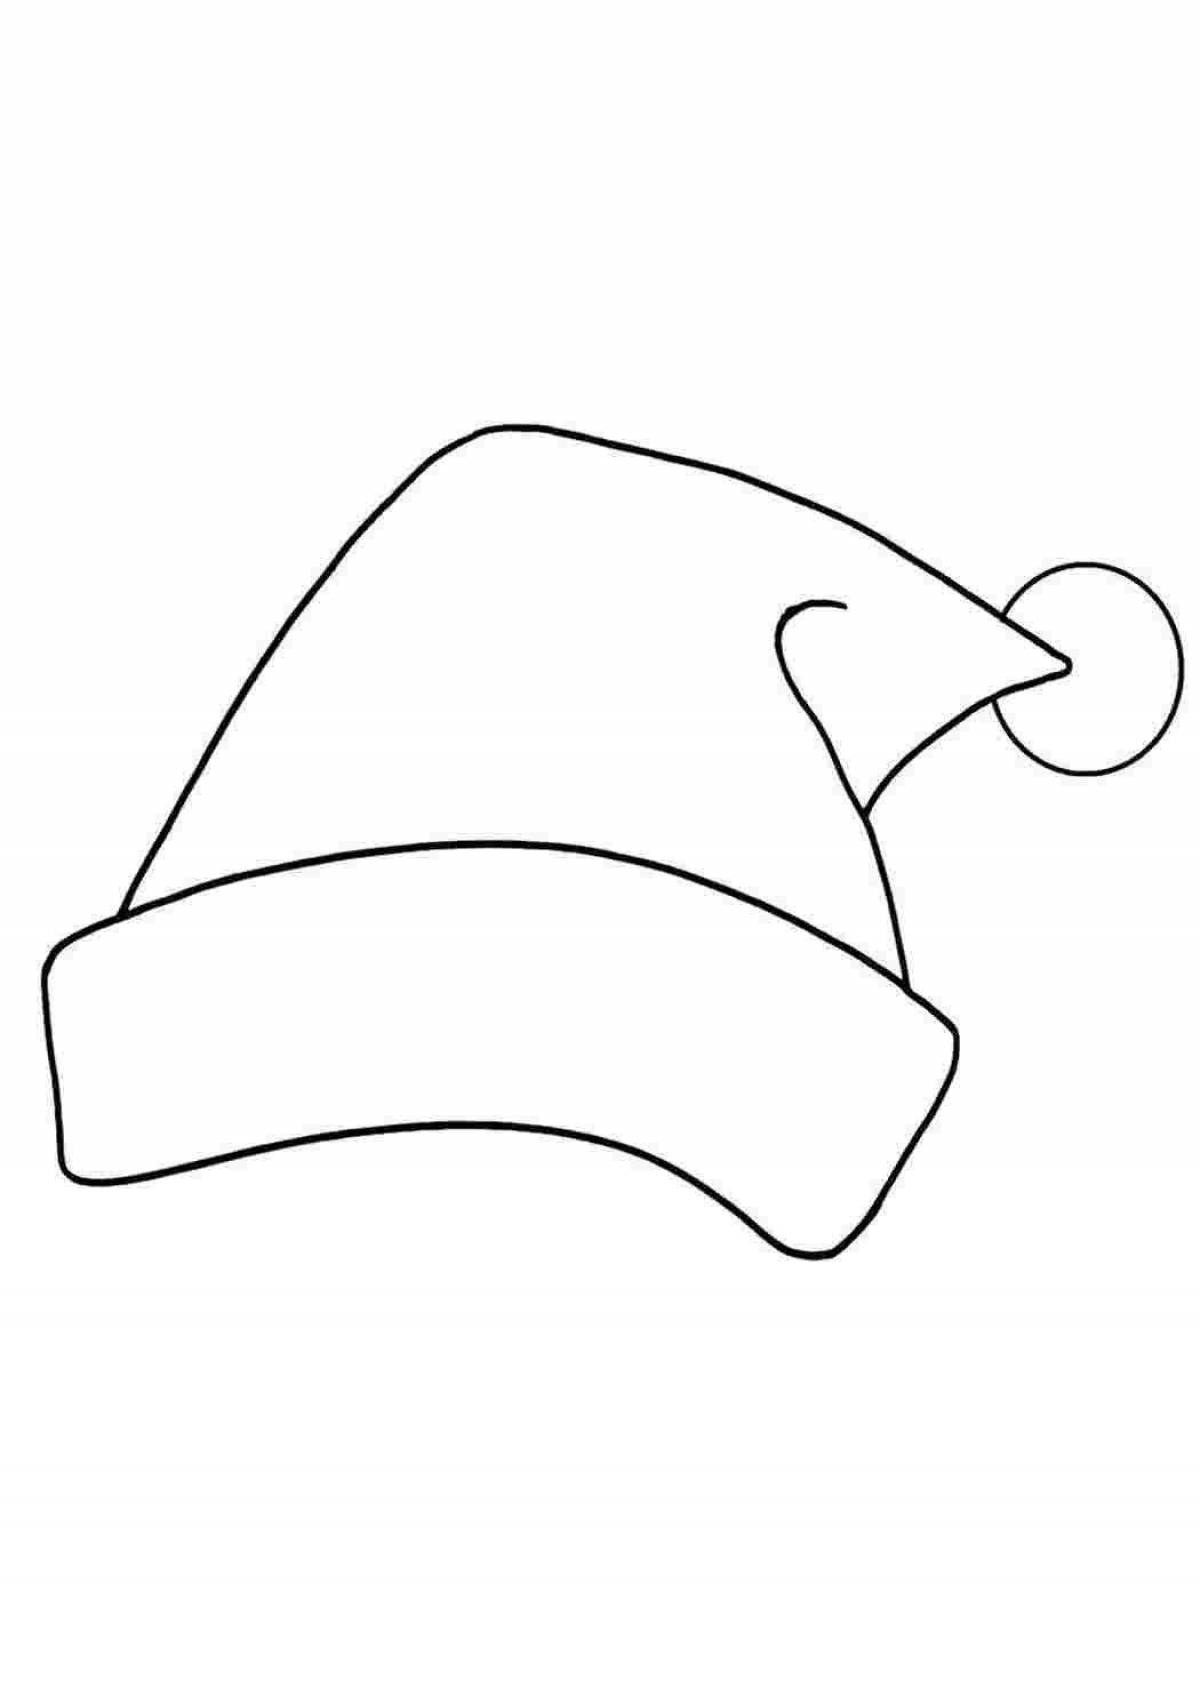 Красочная шапка санта-клауса раскраска для детей